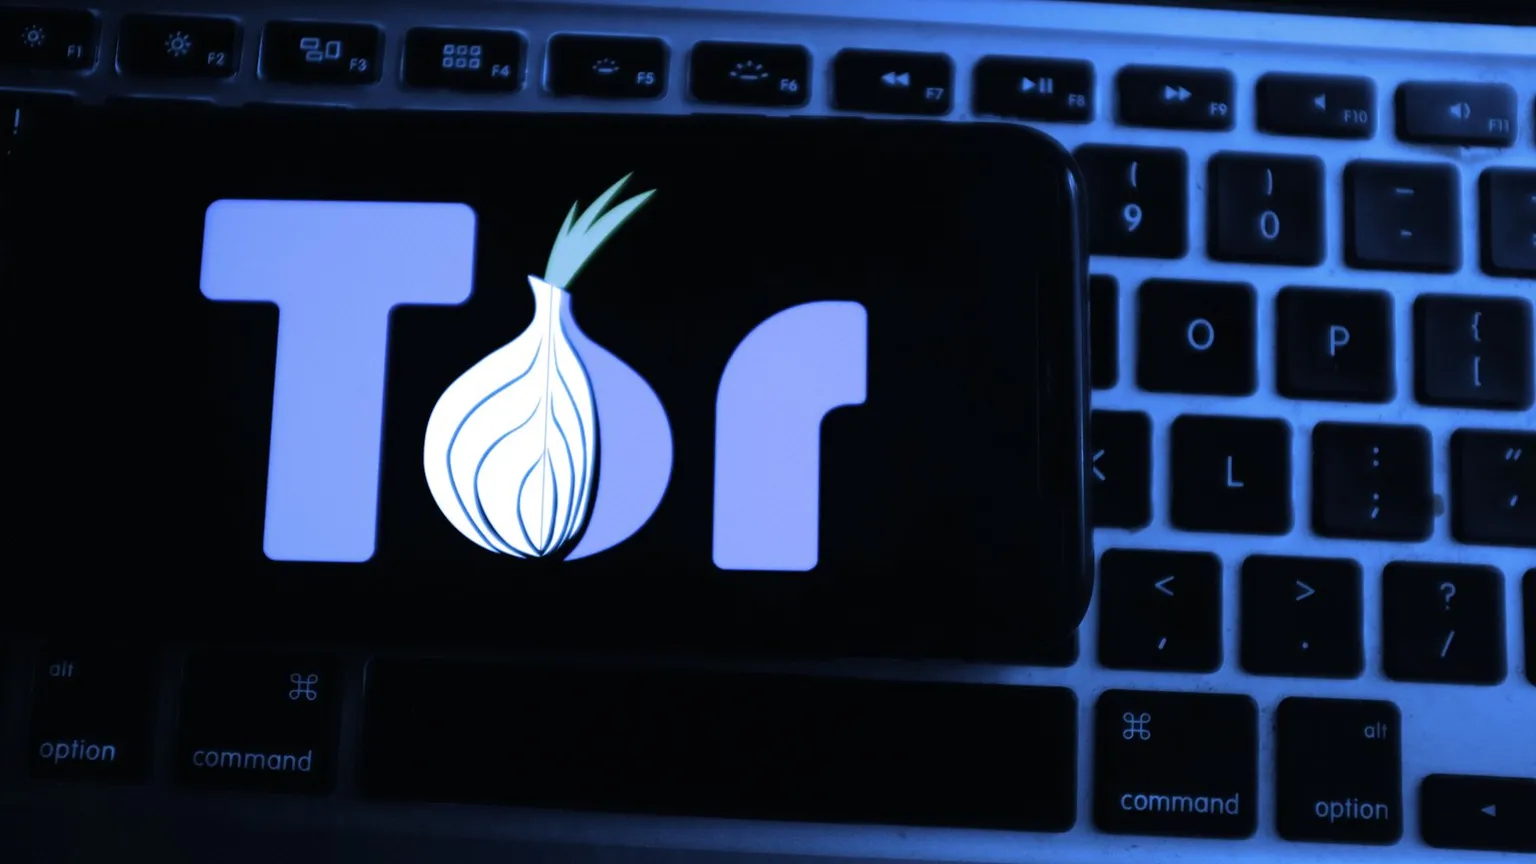 Tor Network. Image: Shutterstock